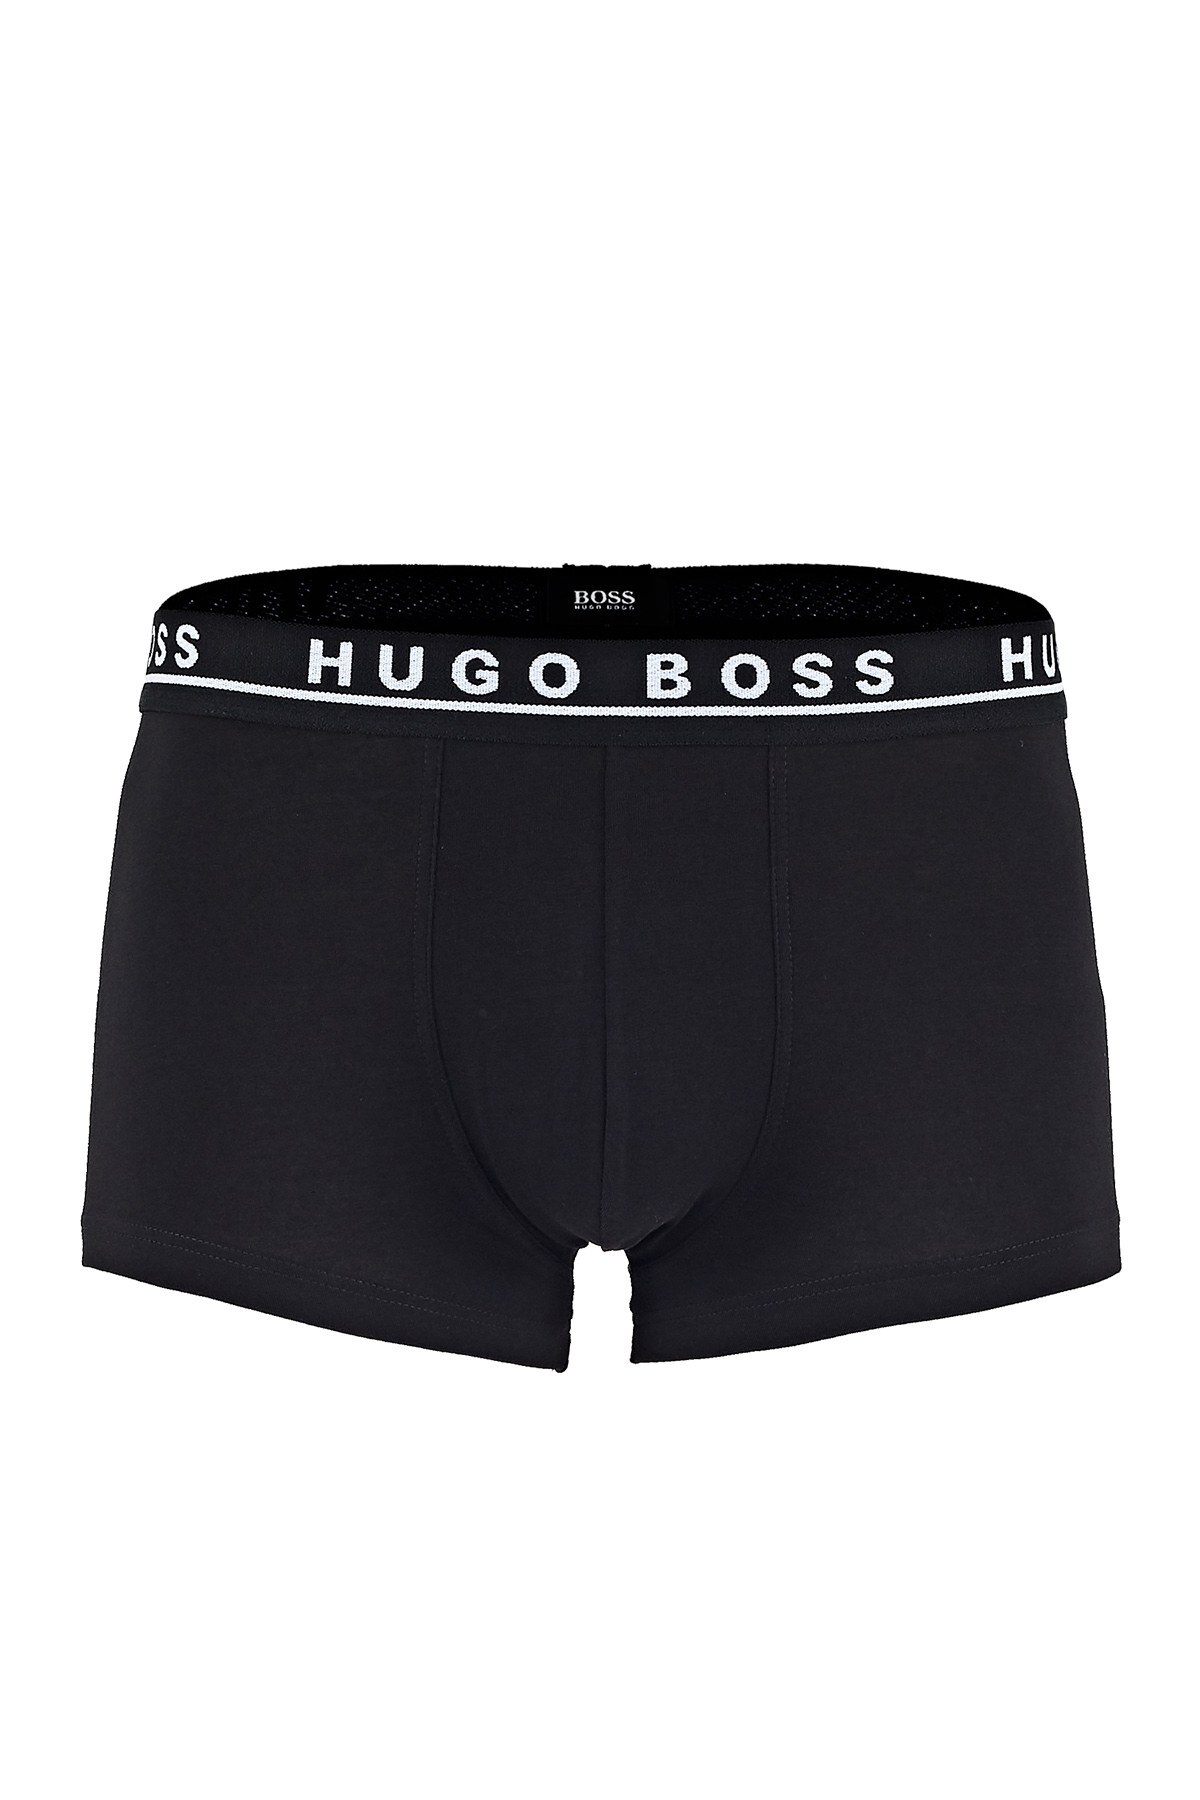 Hugo Boss Pamuklu 3 Pack Erkek Boxer 50325403 999 SİYAH-BEYAZ-GRİ